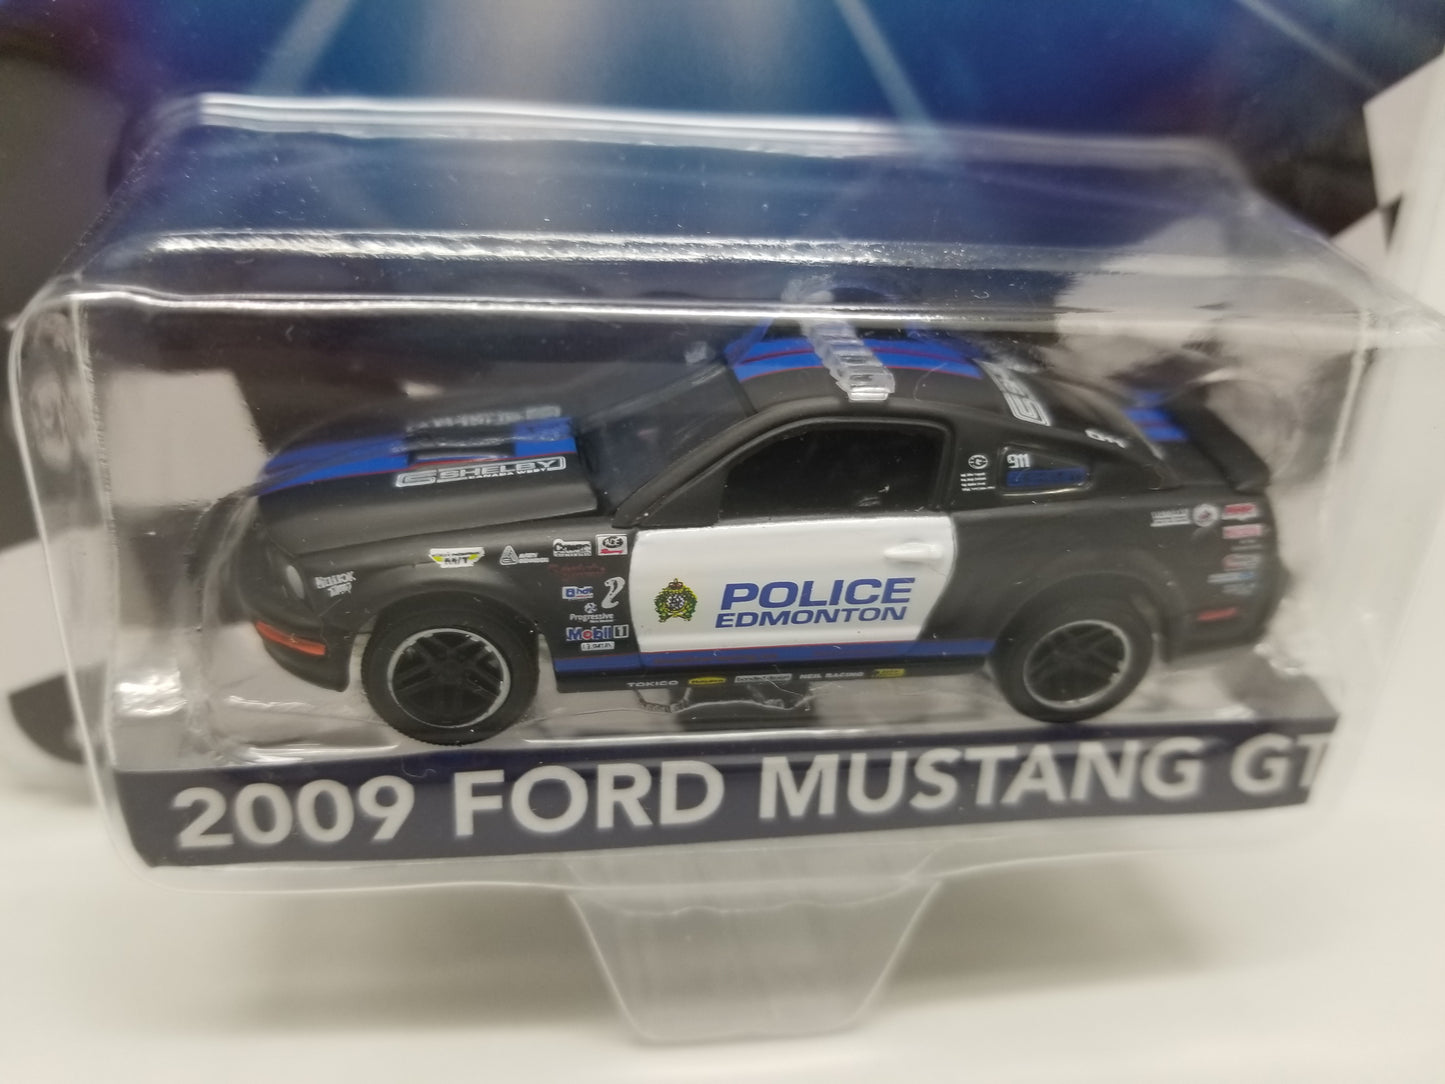 GL - 2009 Ford Mustang GT - Edmonton Police - 25 Years of Blueline Racing